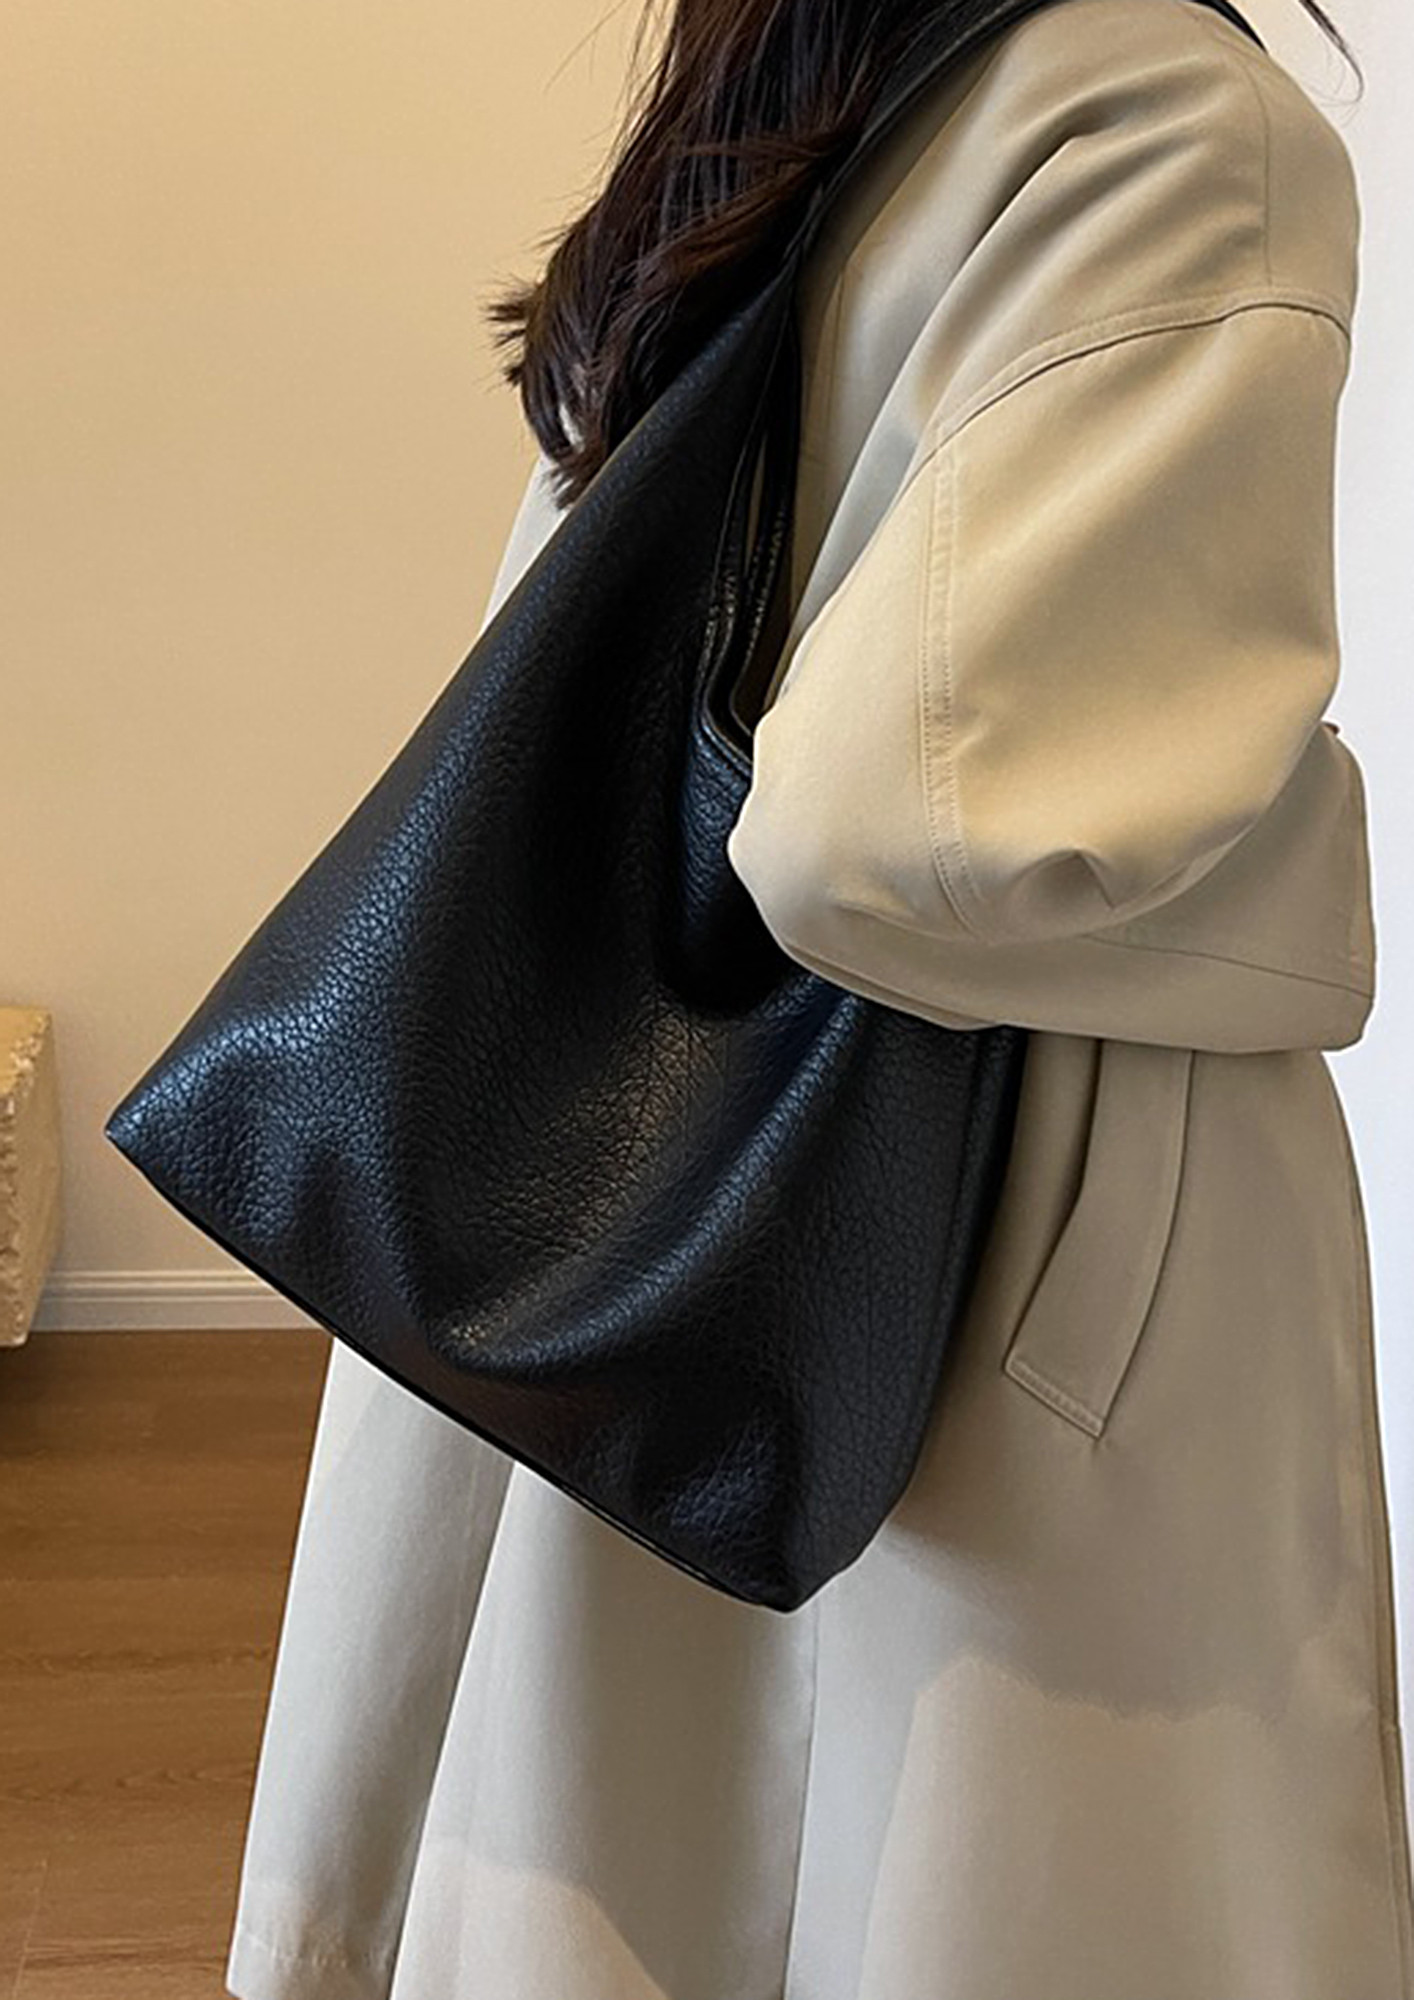 FERRAGAMO: leather bag with Gancini - Black | Ferragamo shoulder bag 213995  764374 online at GIGLIO.COM